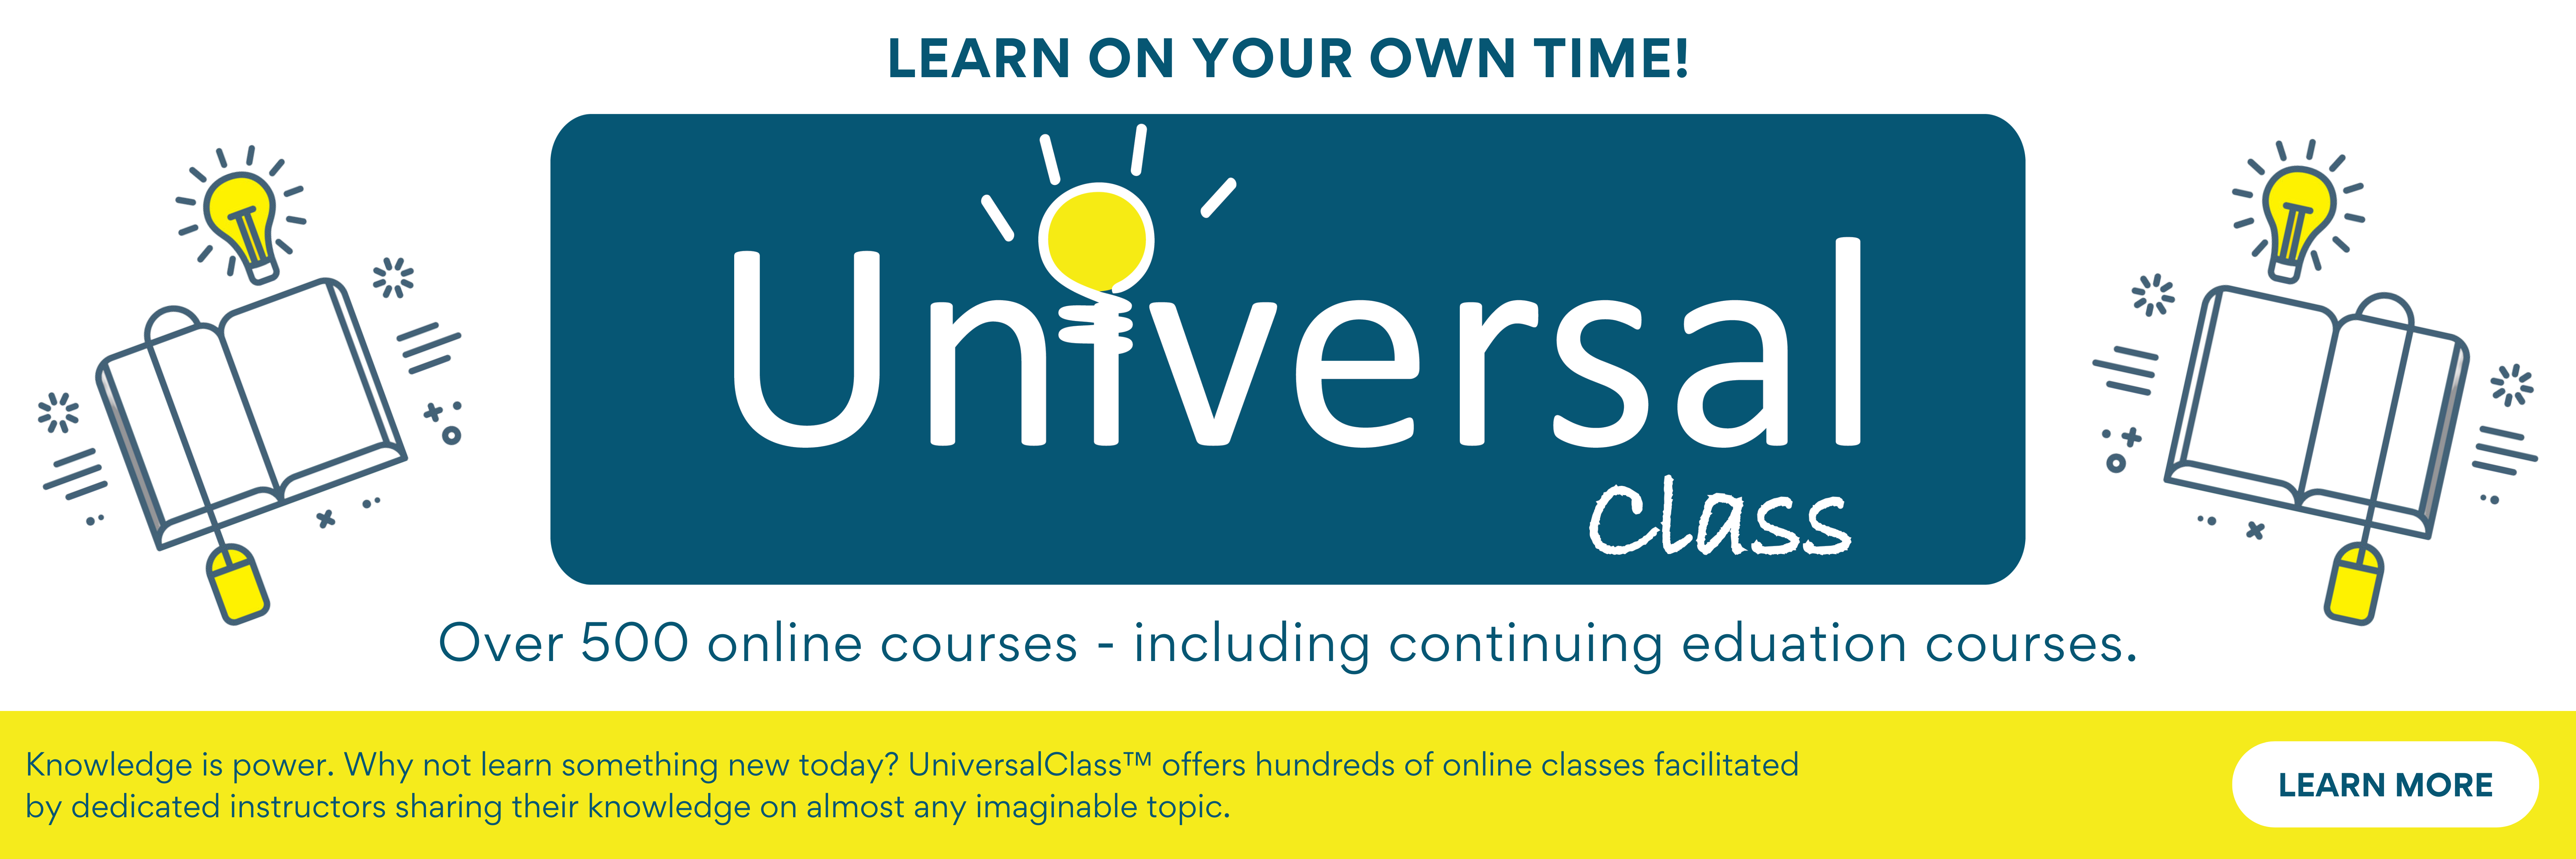 universal class online courses